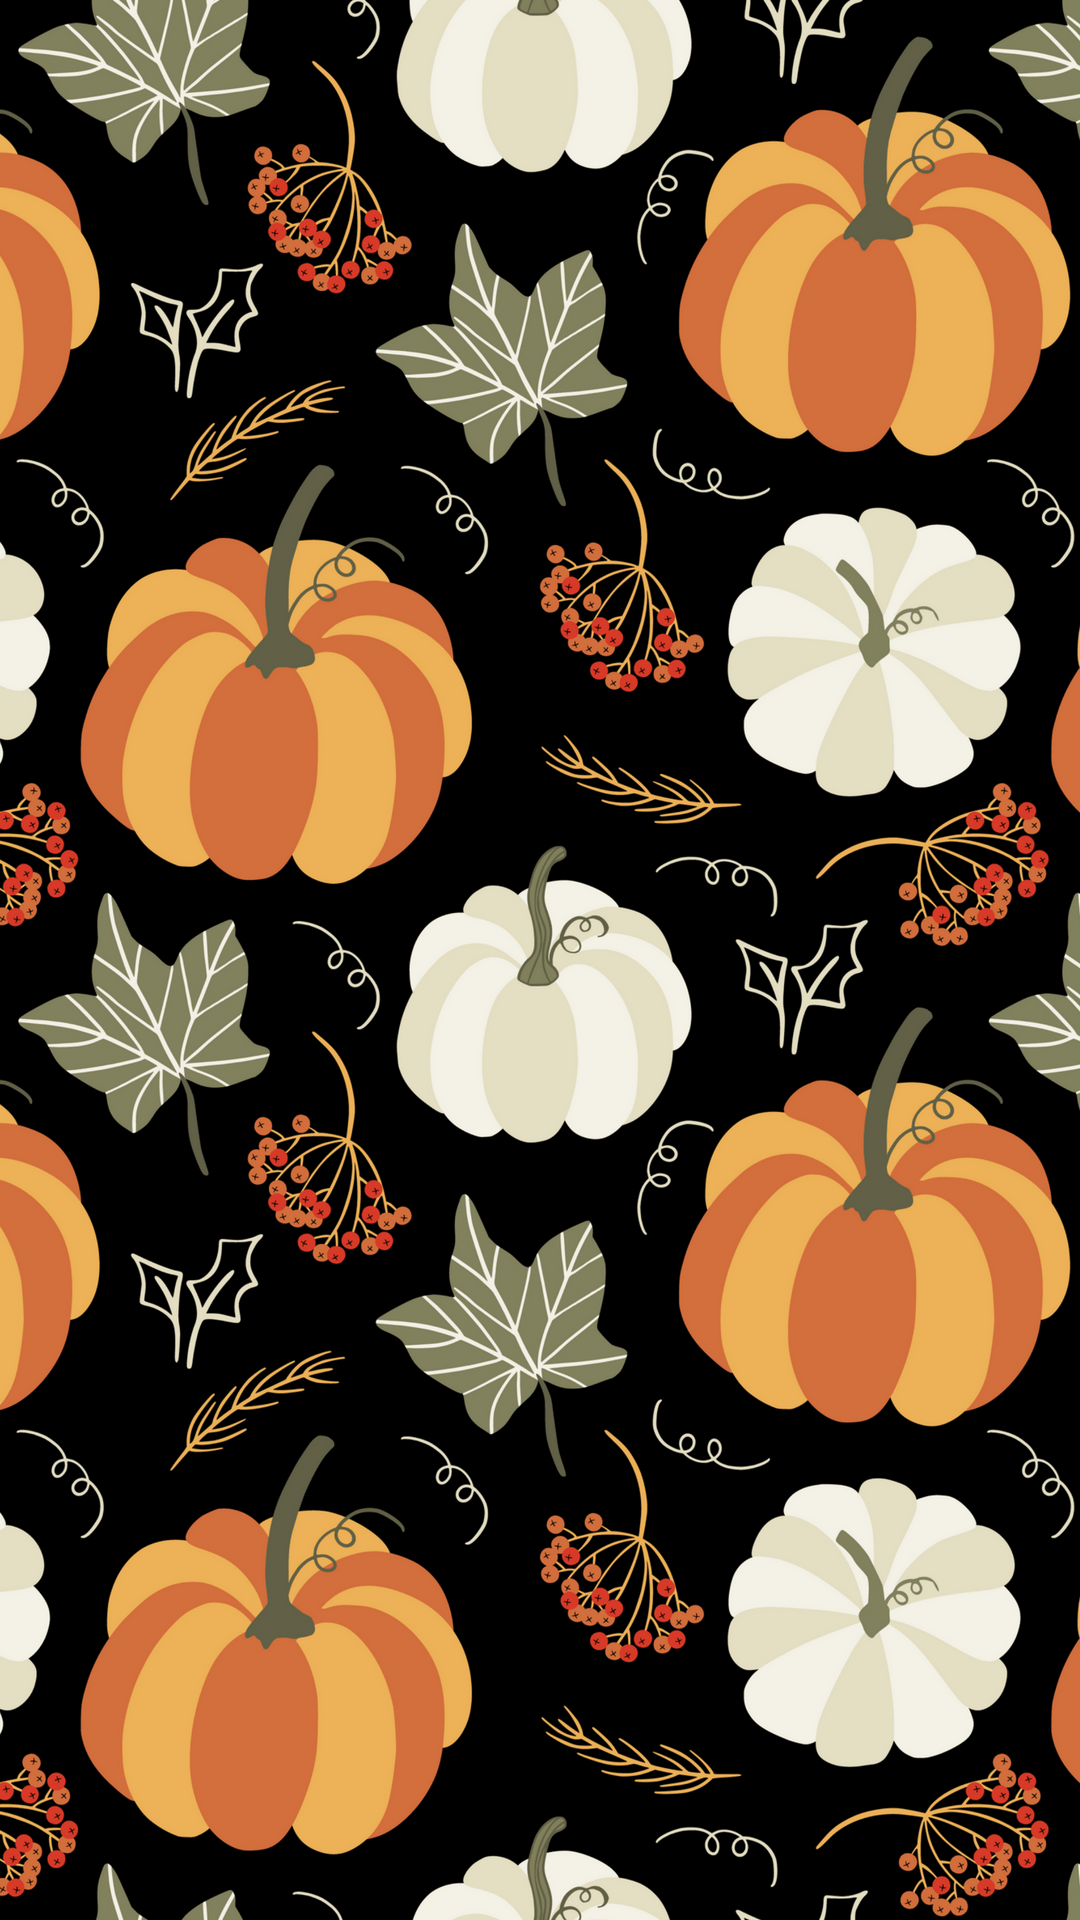 Pumpkin Graphic Smart Phone Wallpaper.png 1 080×1 920 пикс #iPhoneBackground. Fall Wallpaper, IPhone Wallpaper Fall, Halloween Wallpaper Iphone